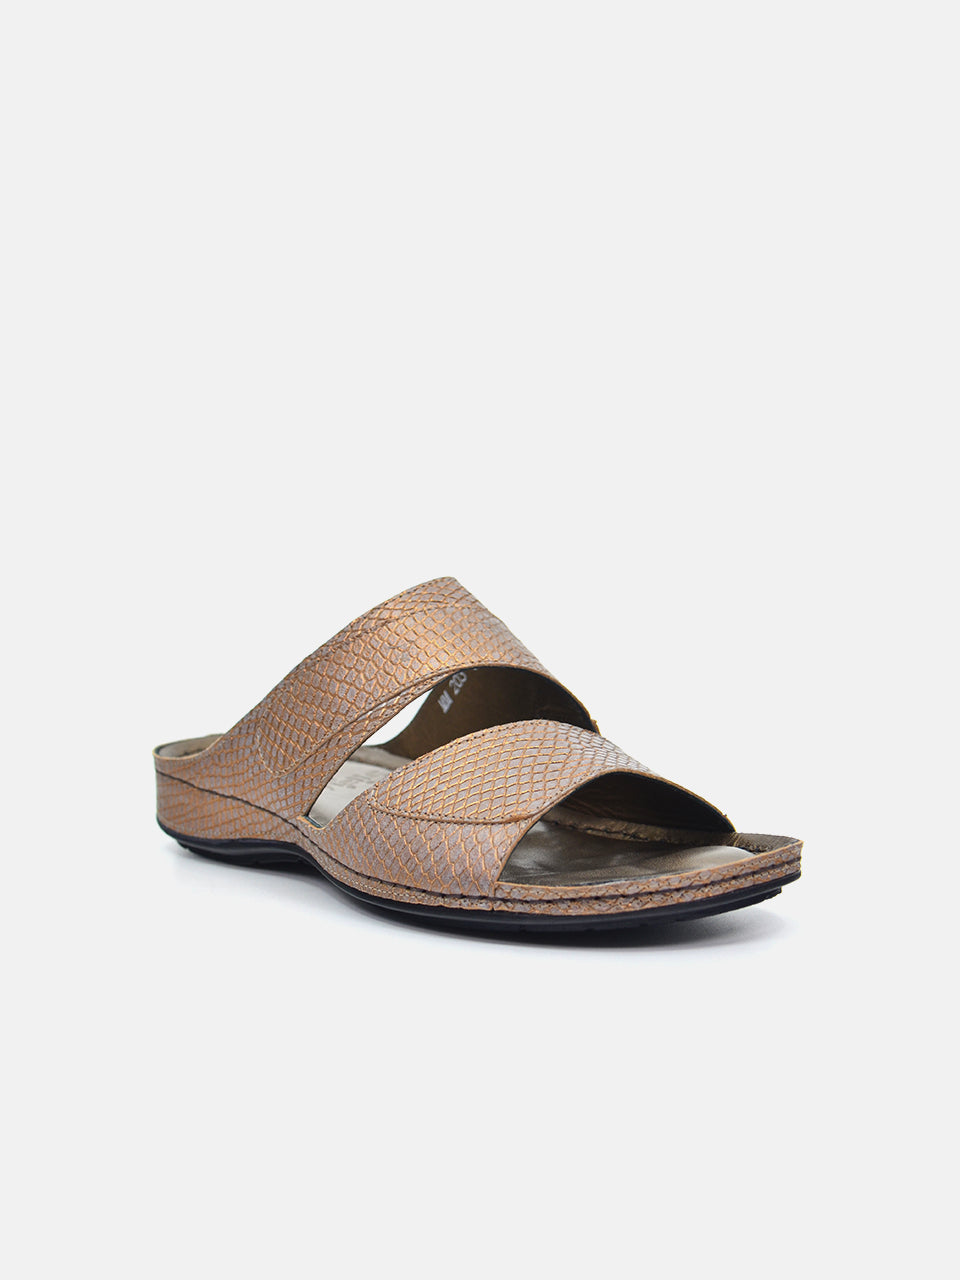 Michelle Morgan MM-203 Women's Slider Sandals #color_Brown